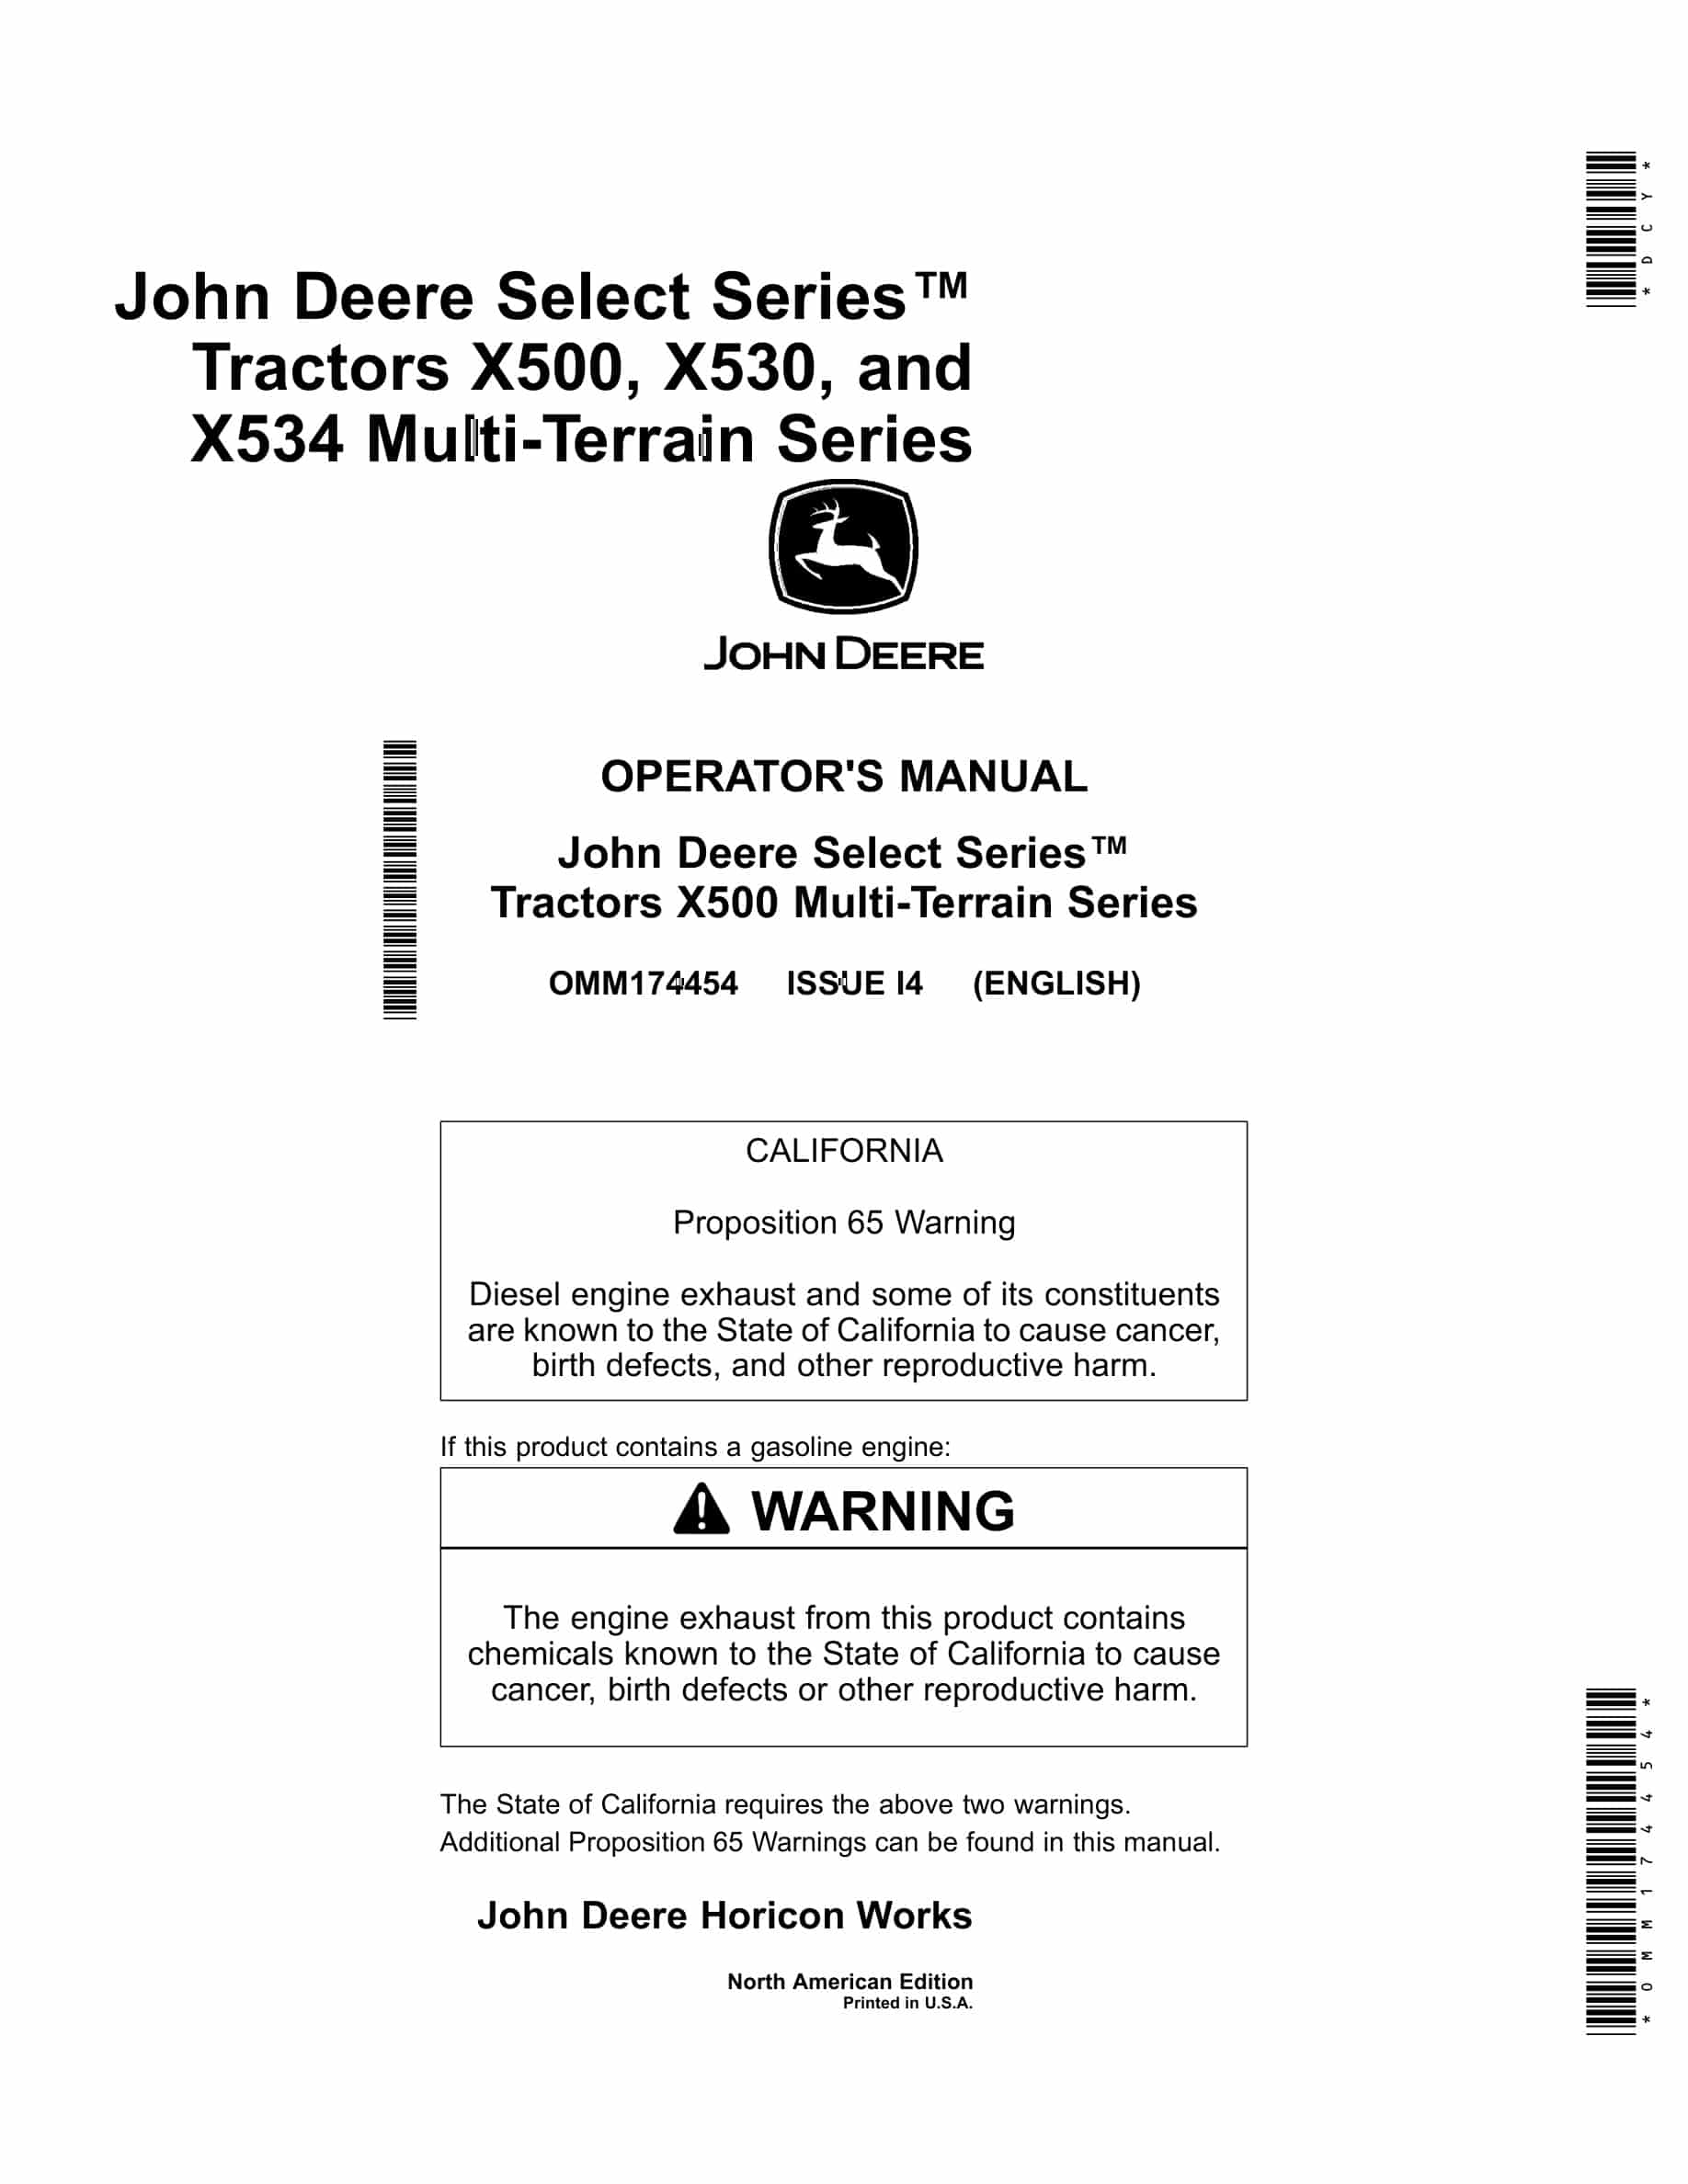 John Deere X500, X530, and X534 Tractor Operator Manual OMM174454-1